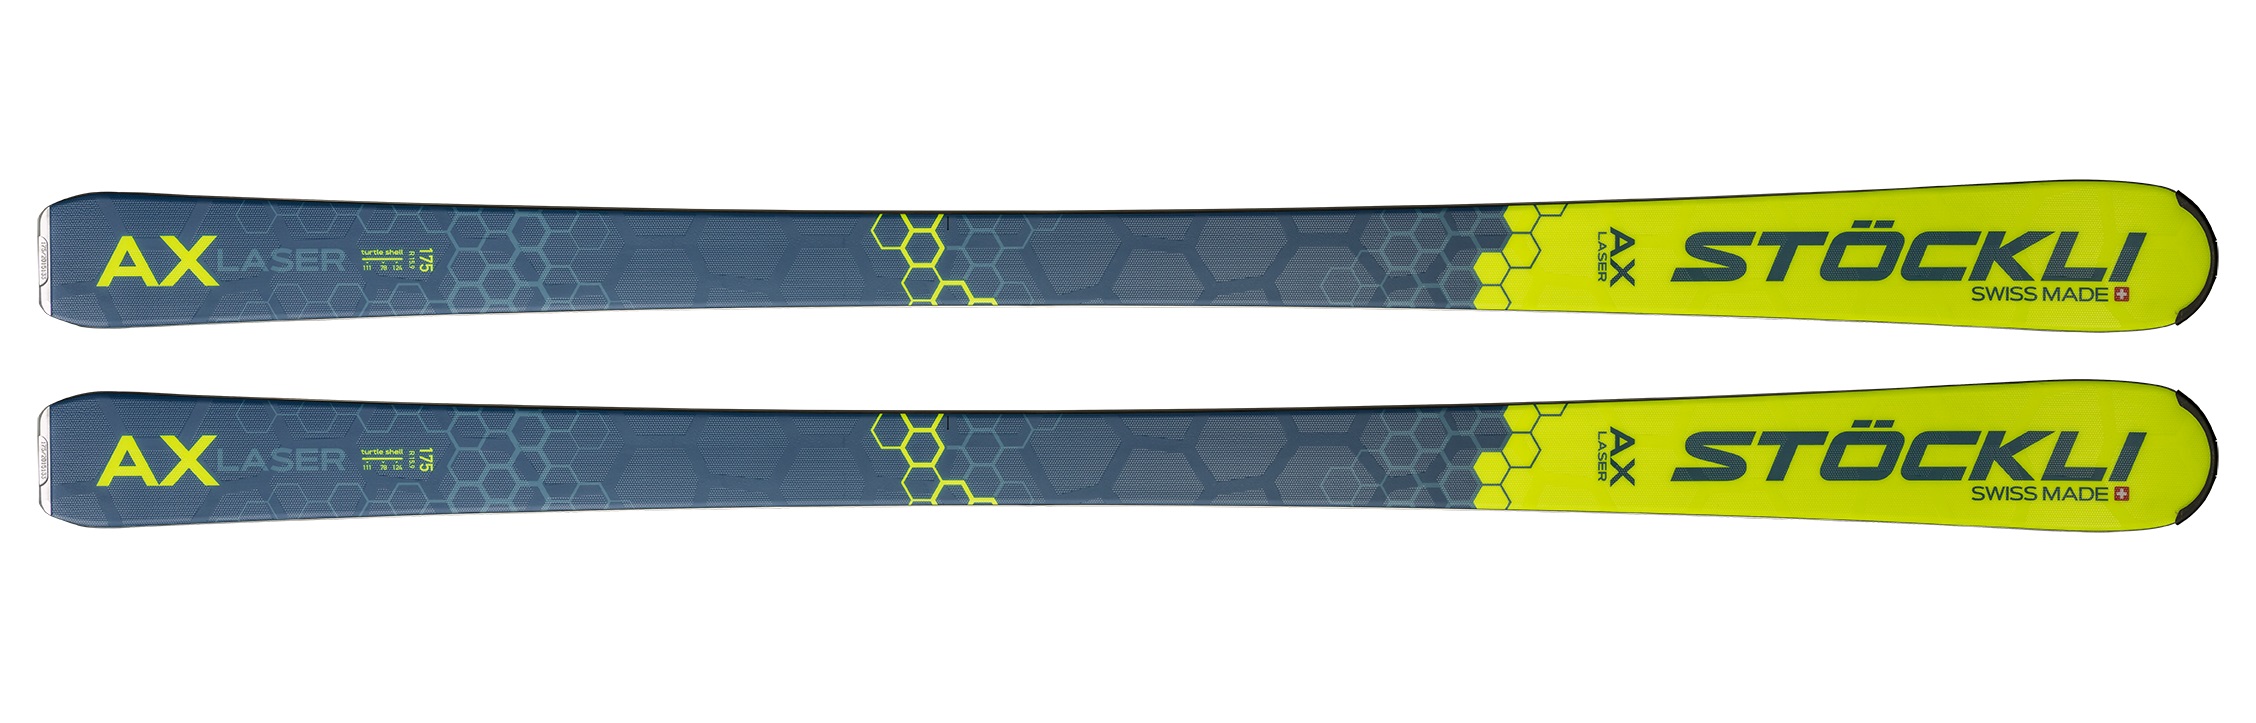 фото Горные лыжи stockli laser ax + attack 13 at 2022 blue/yellow, 175 см